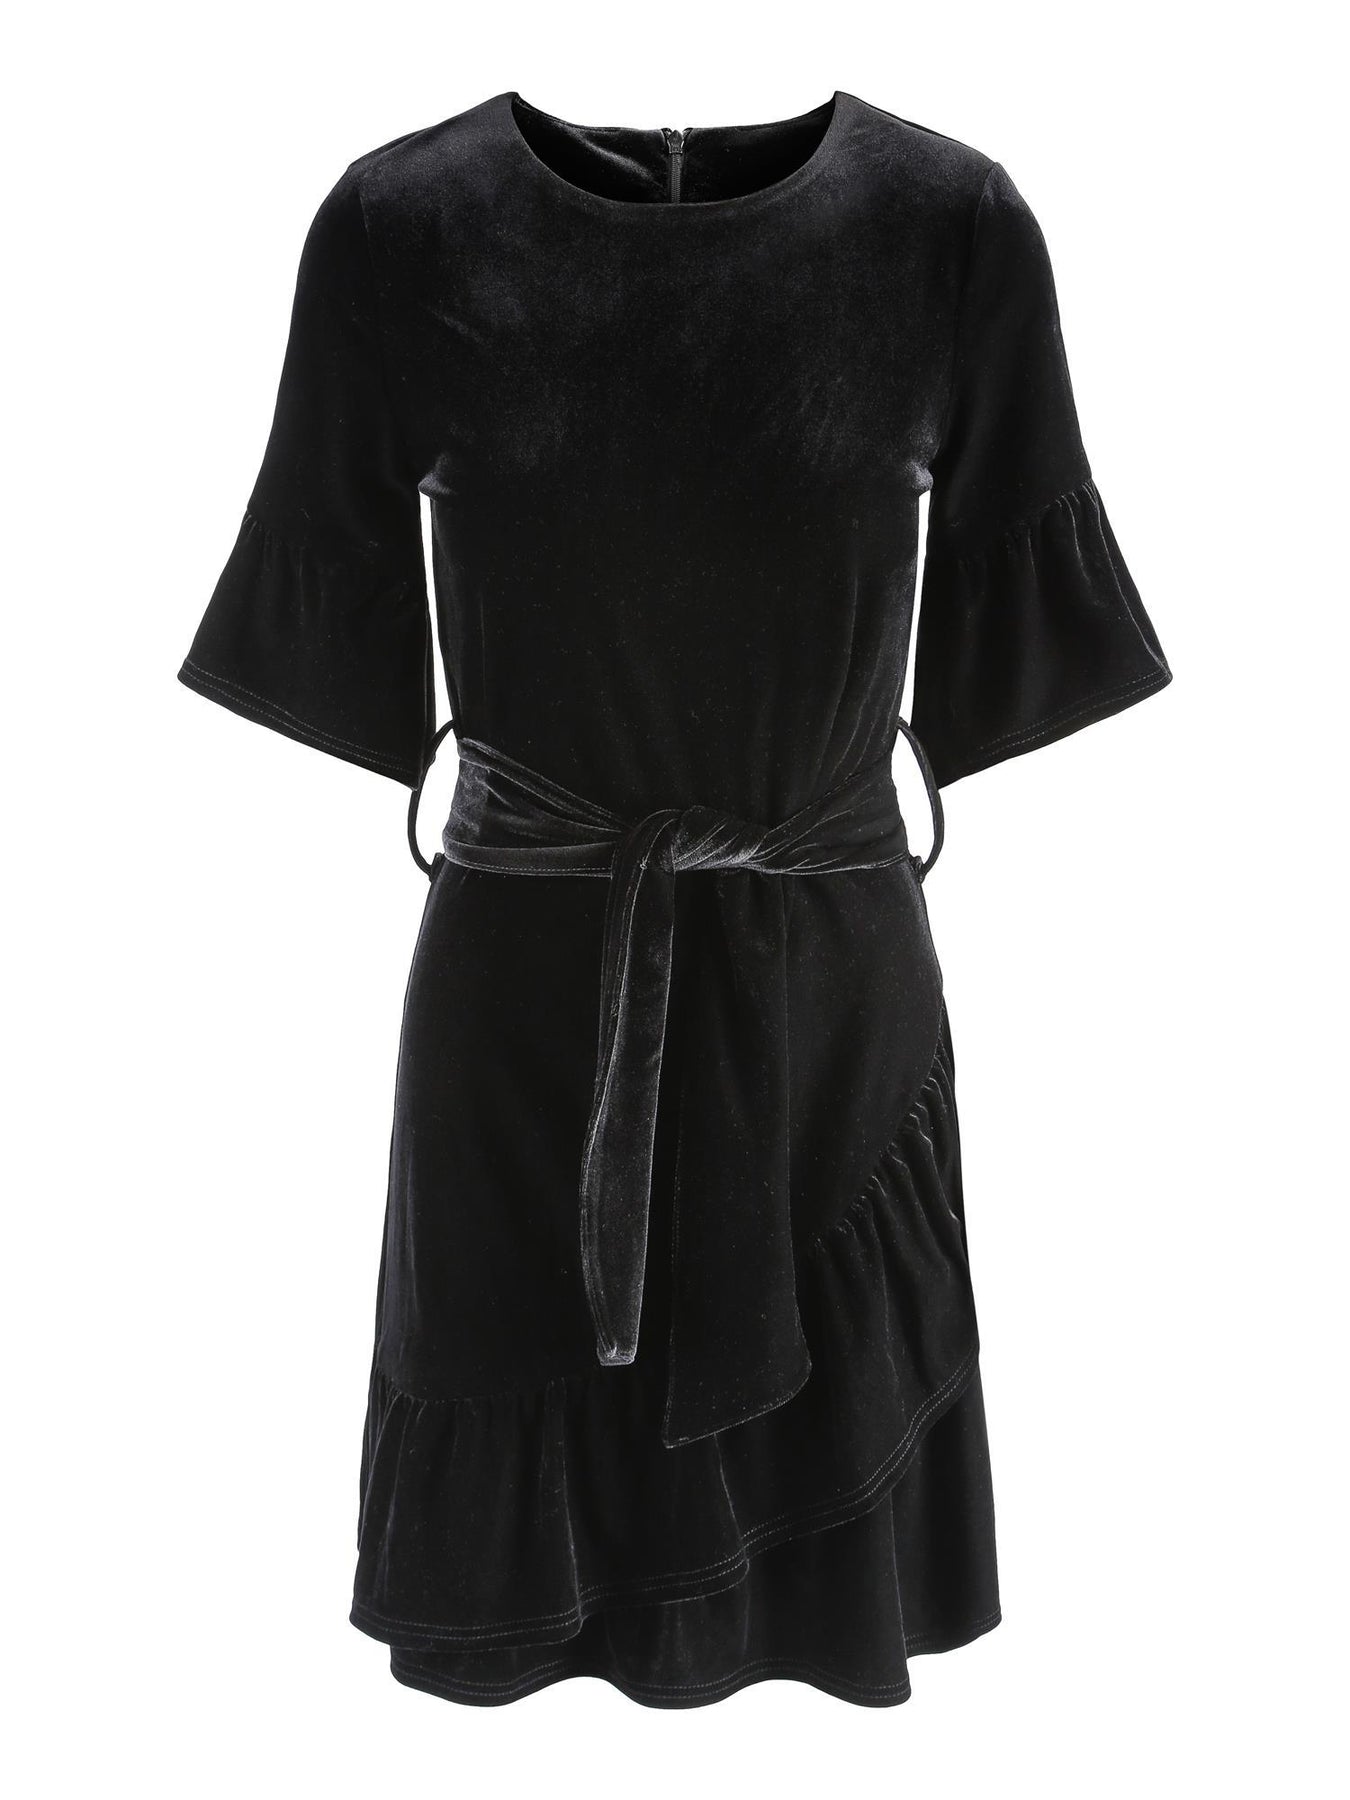 Charlisse Velour Dress - Black - Ella & il - Kjoler - VILLOID.no